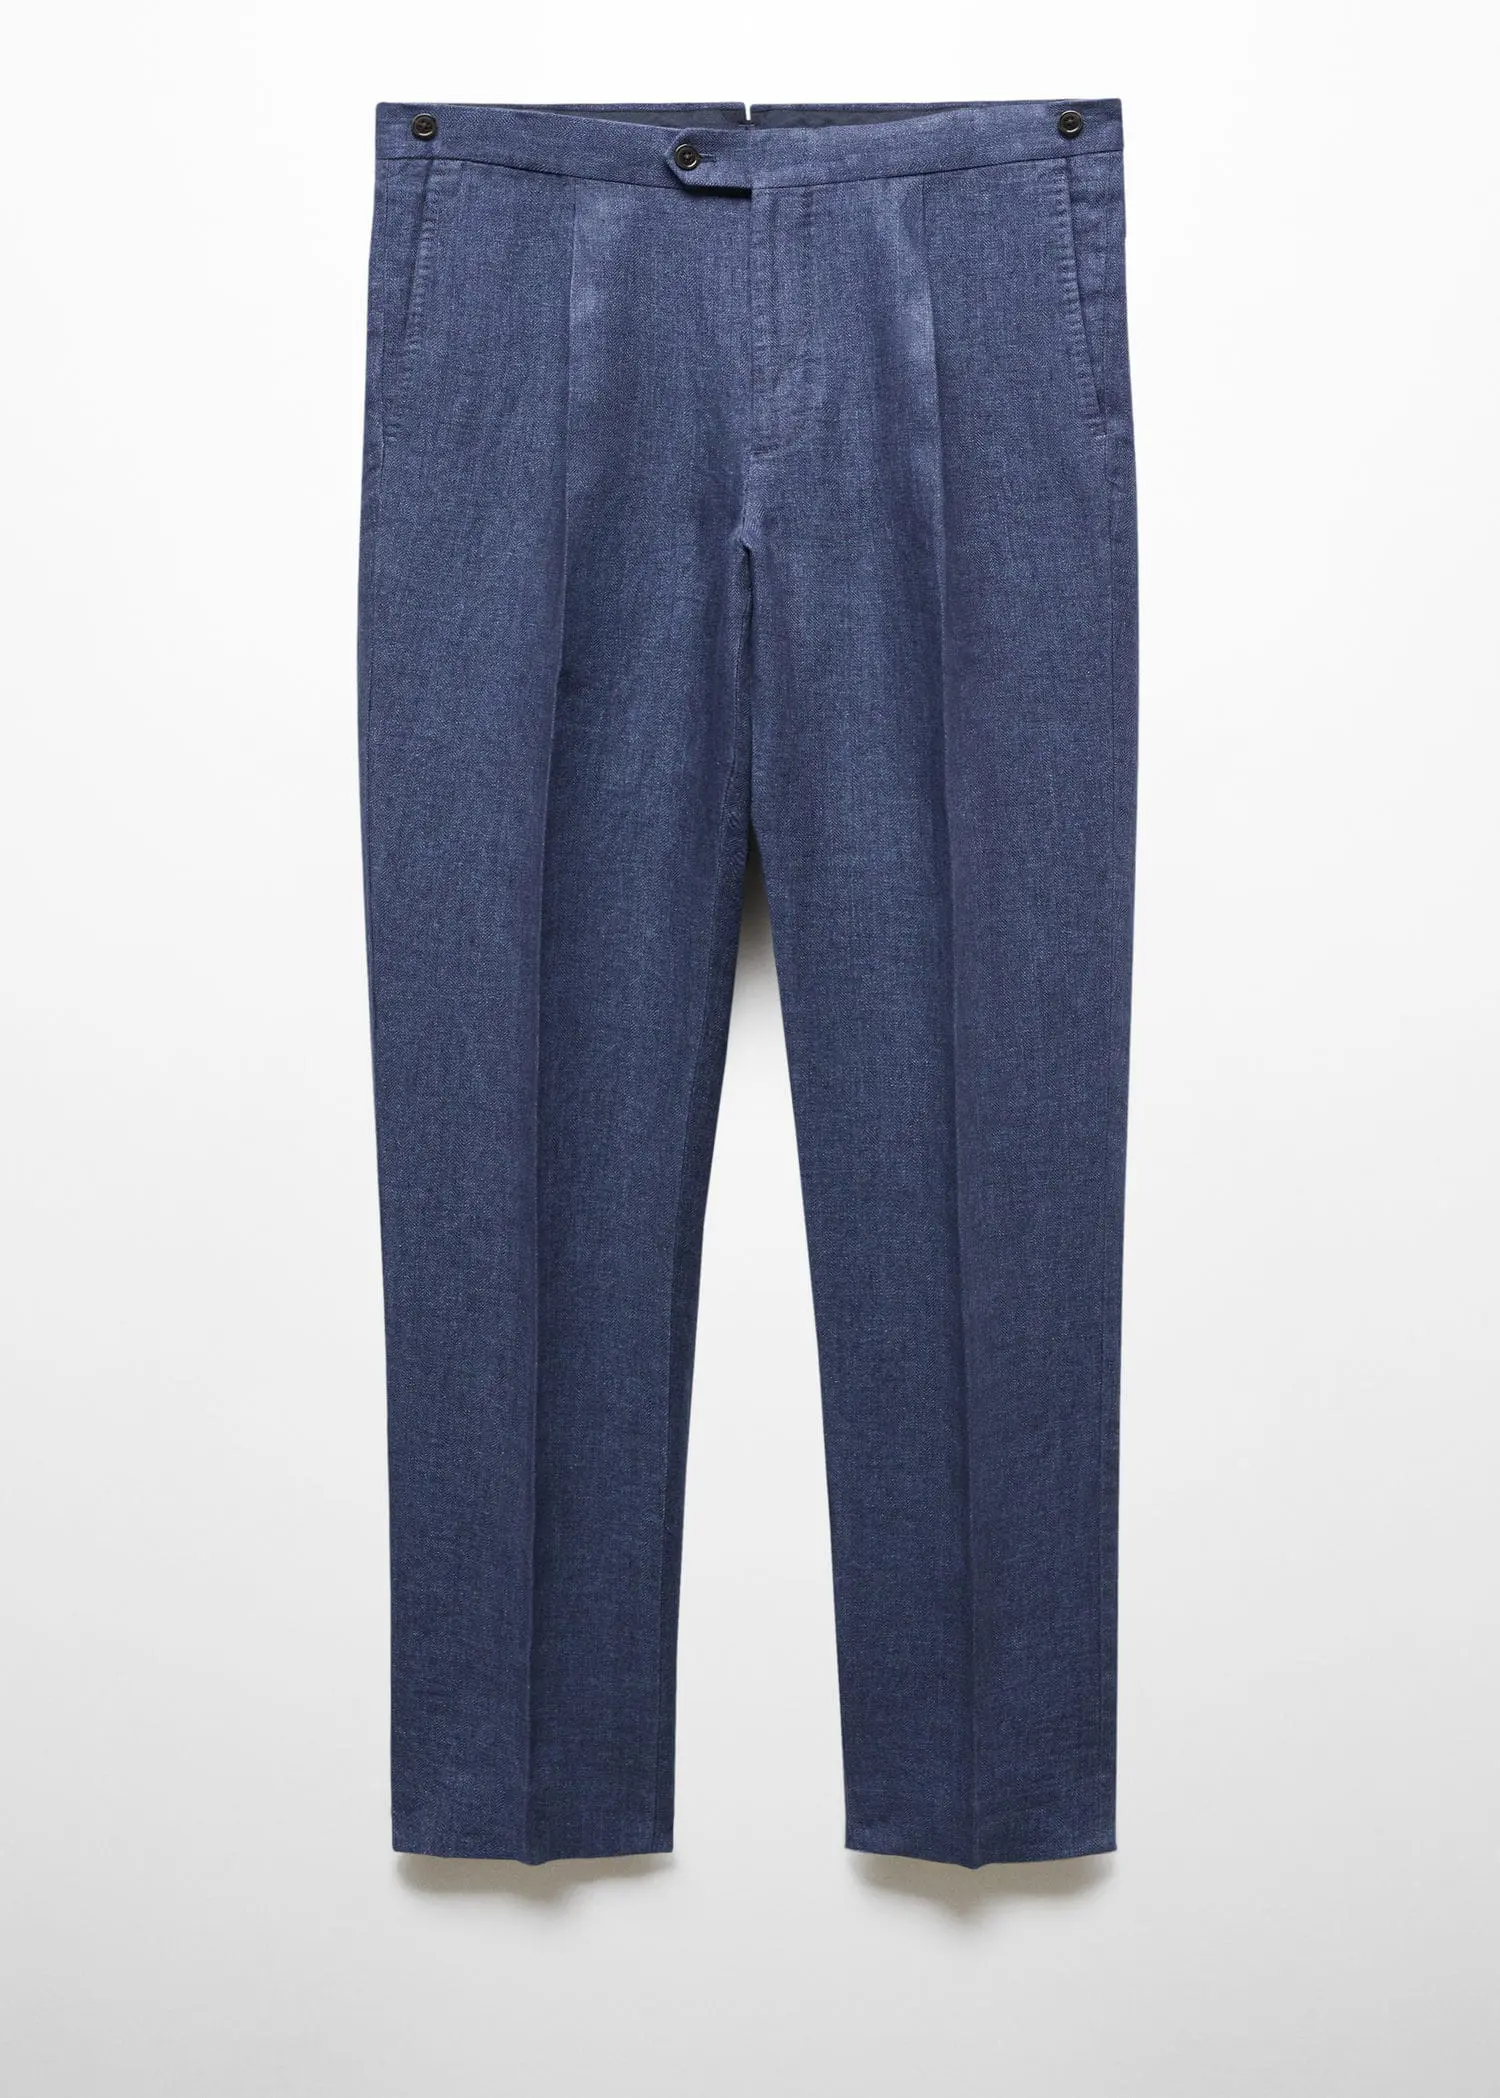 Mango Slim fit suit pants 100% herringbone linen. 1